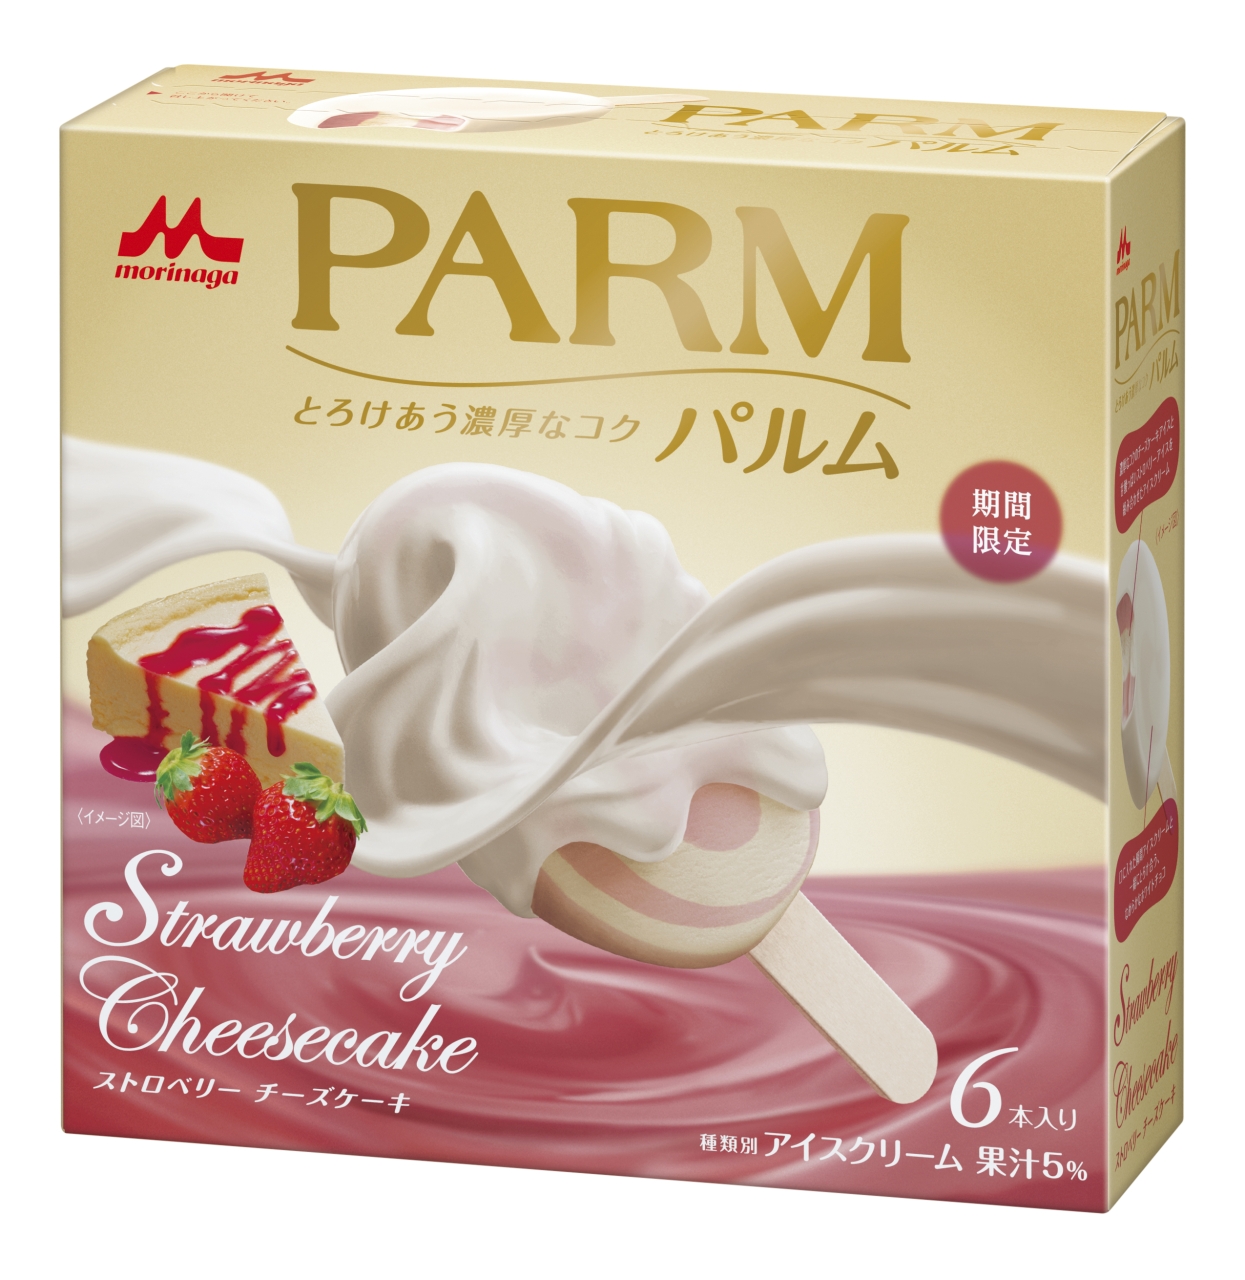 Parm パルム ストロベリーチーズケーキ 6本入り 2月8日 月 より全国で期間限定発売 森永乳業株式会社のプレスリリース